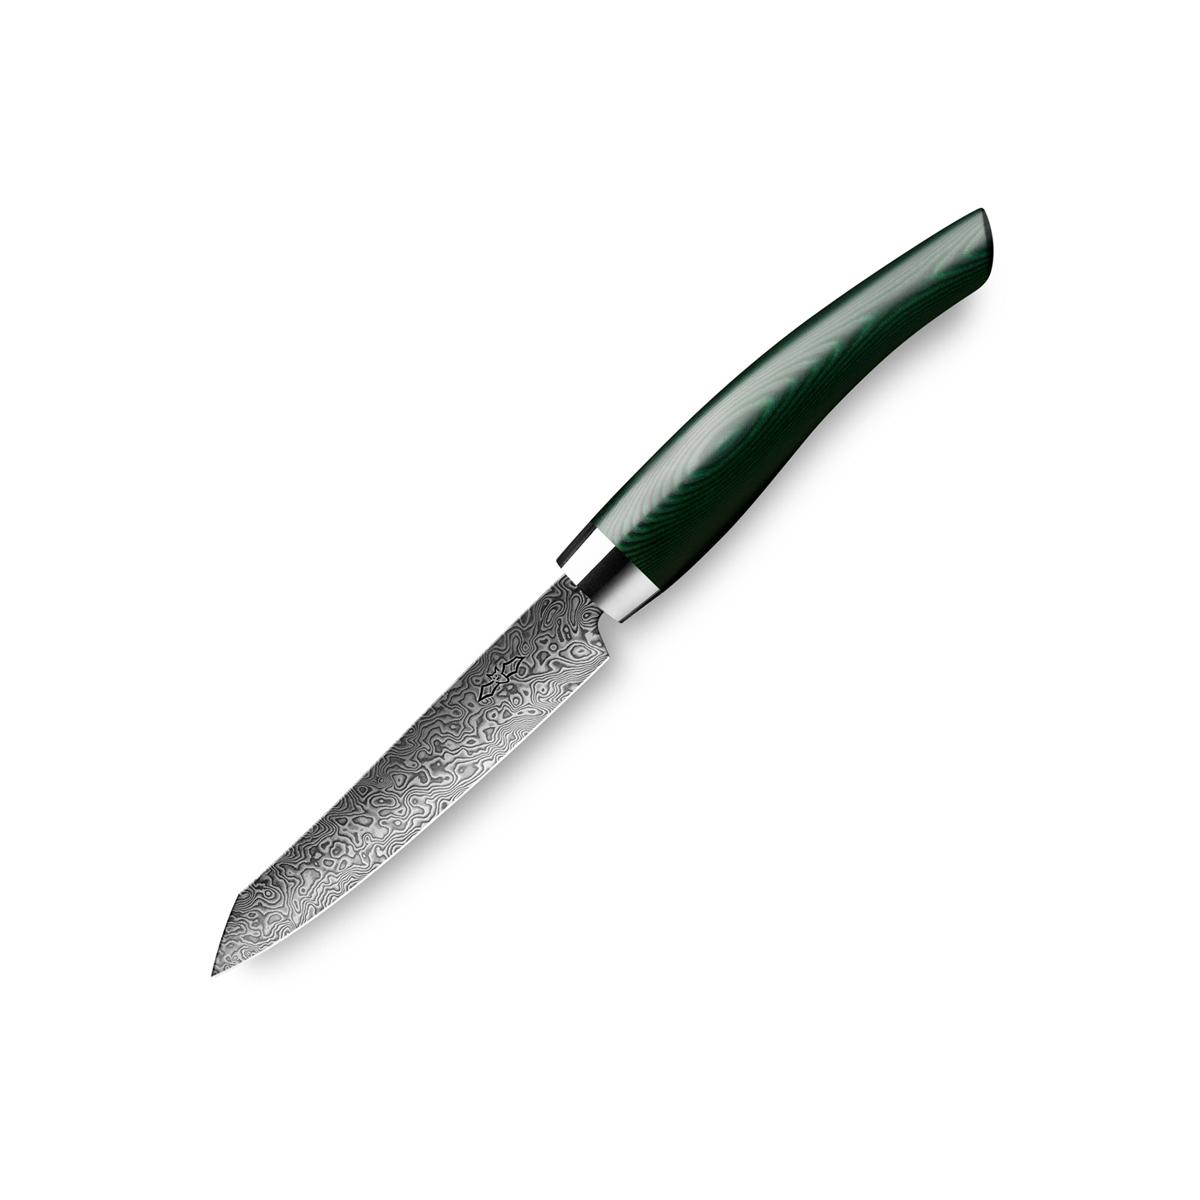 Nesmuk Exklusiv C90 Damast Officemesser 9 cm - Griff Micarta grün